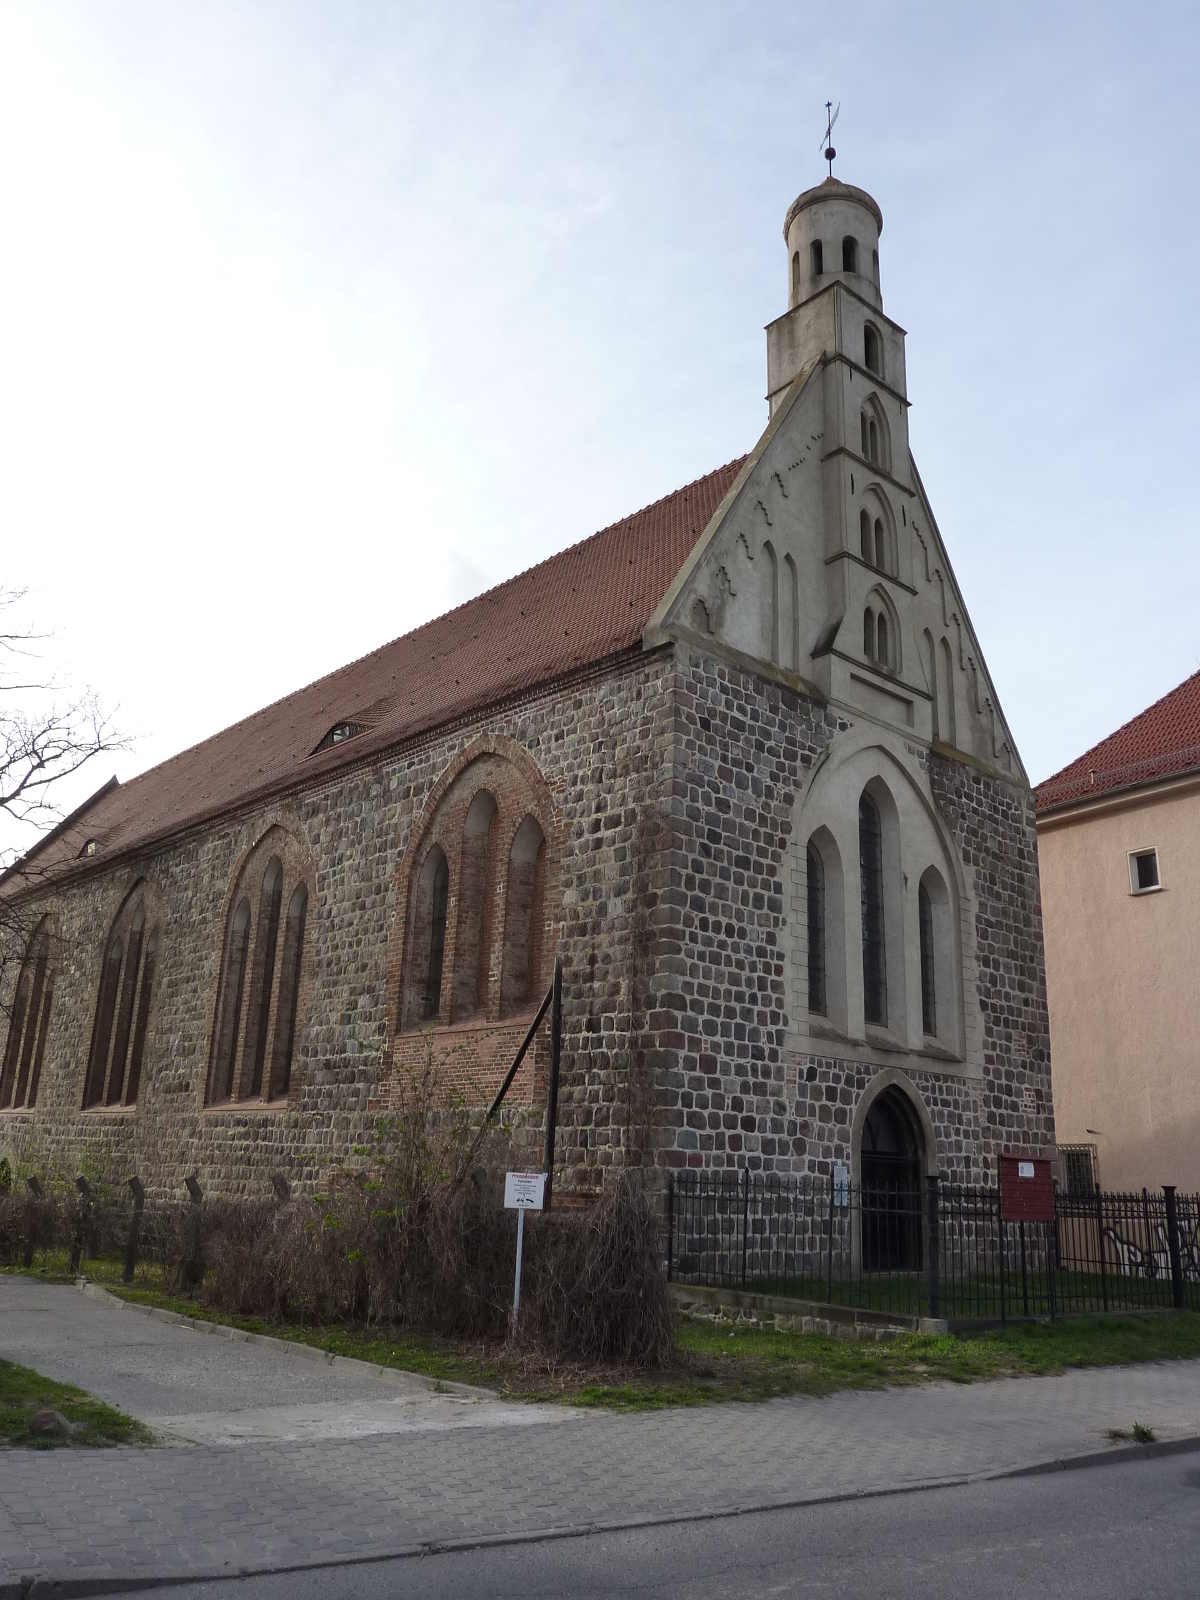 Monastery church of the Franciscans, Prenzlau